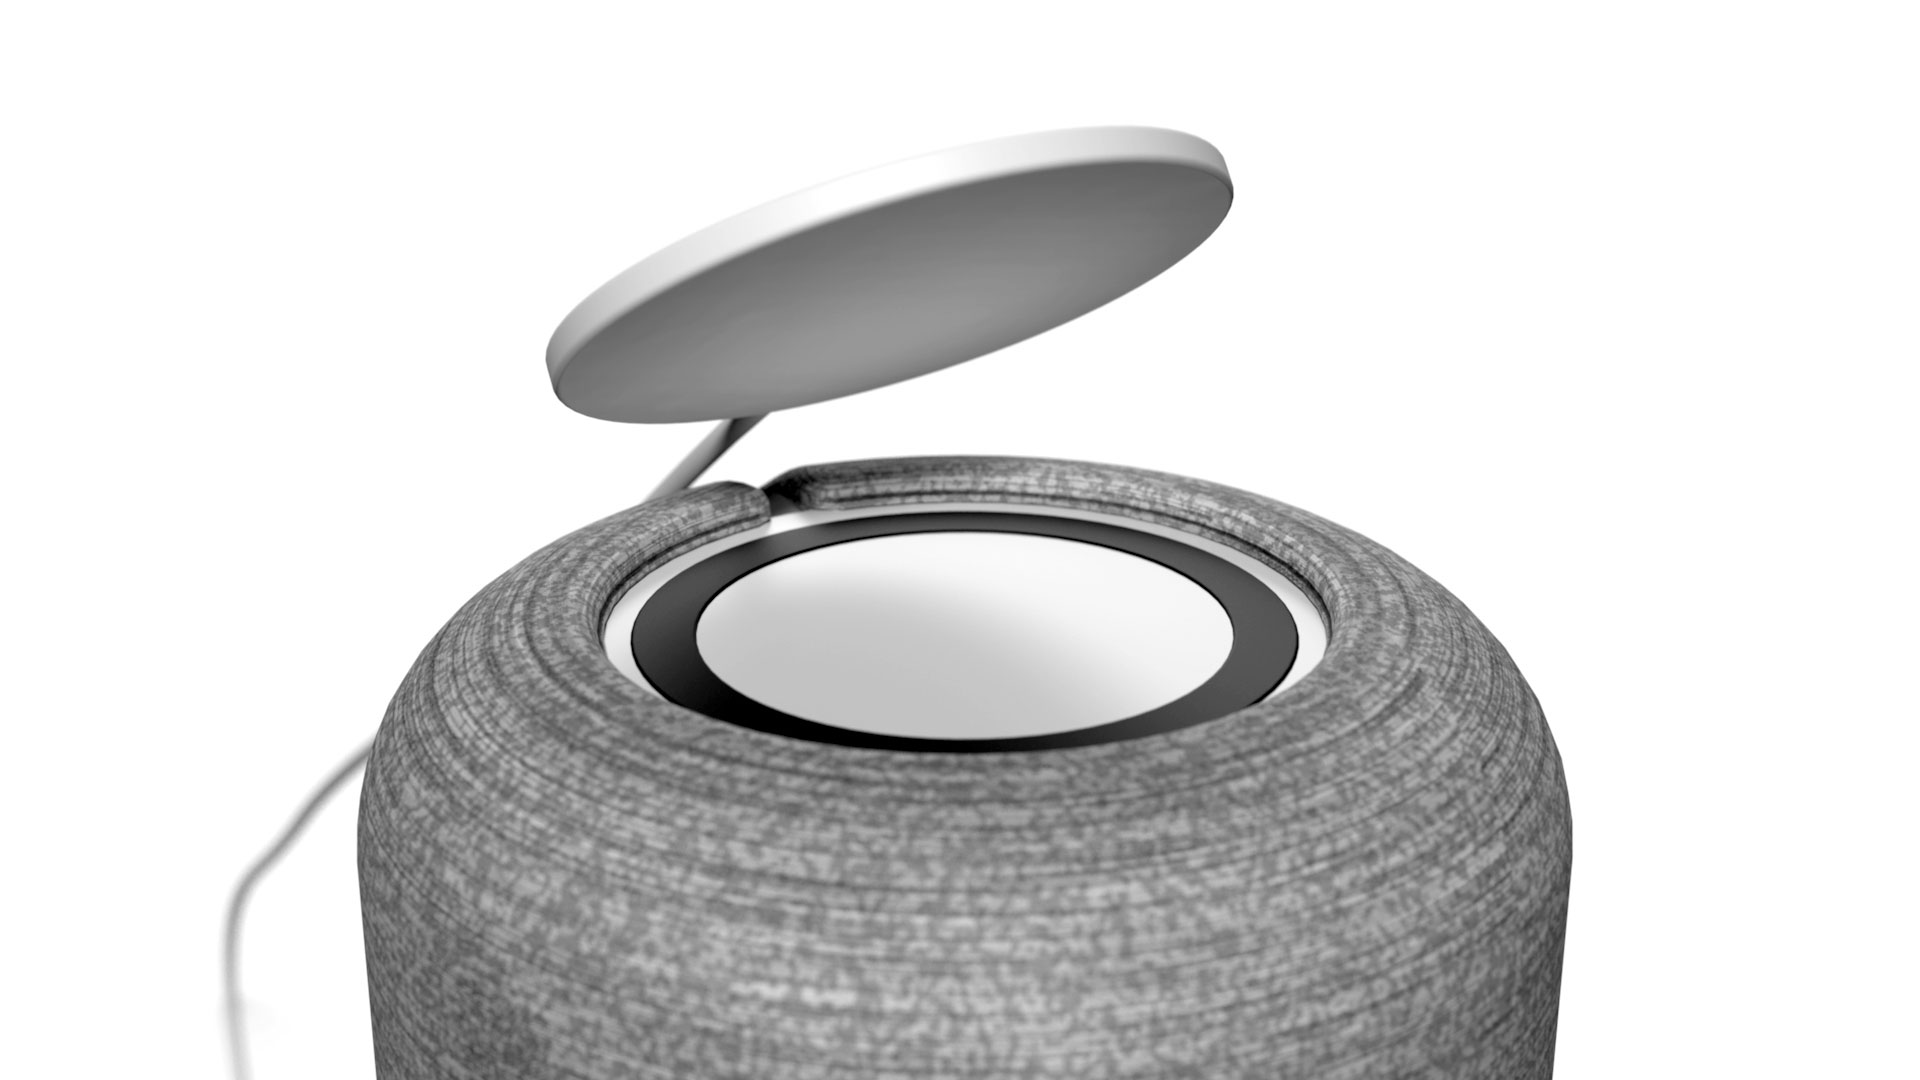 Gloo detail view of wireless charging on smart speaker